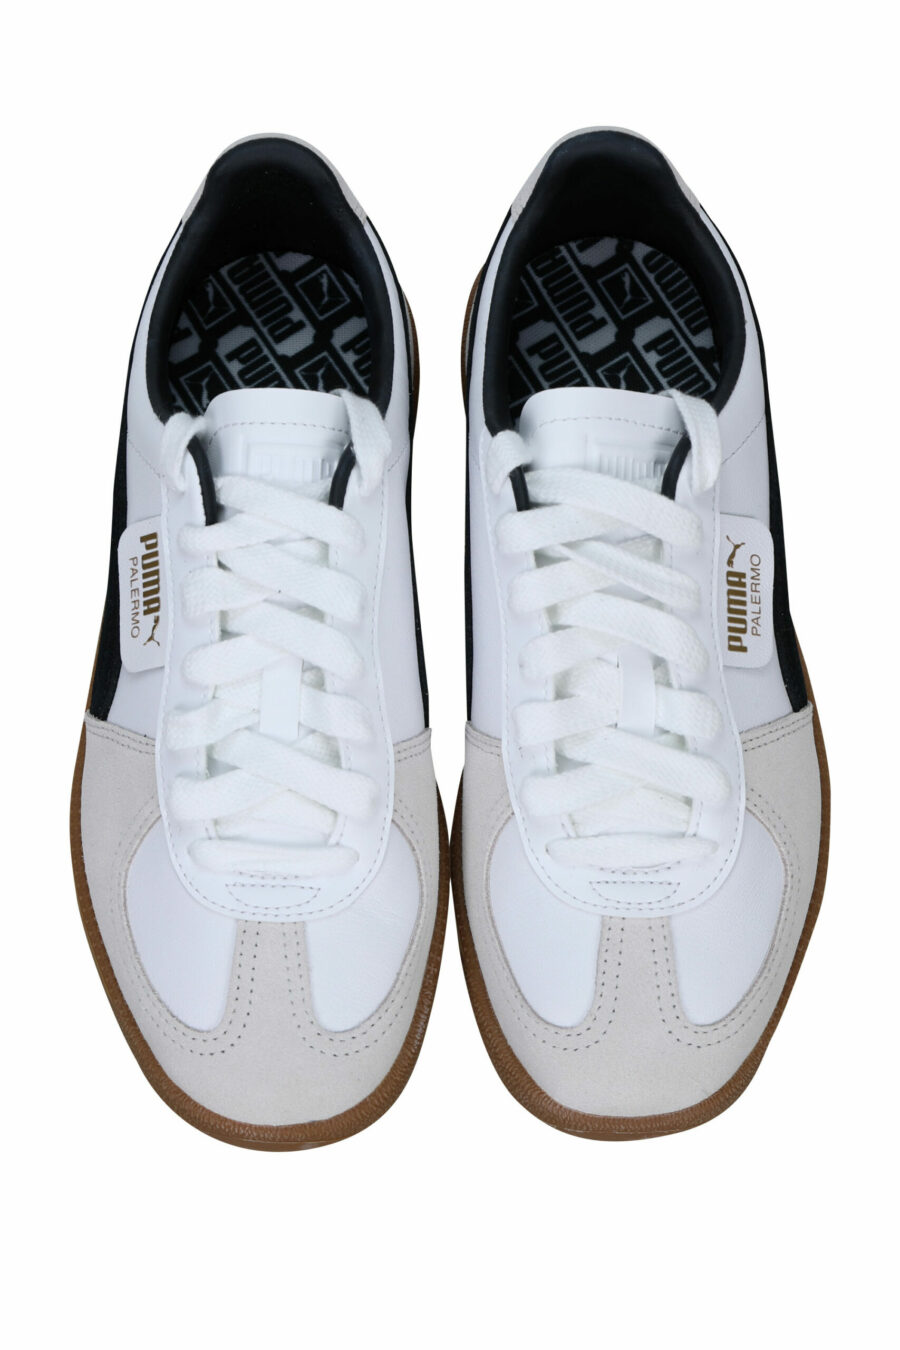 Zapatillas "palermo" blancas mix con logo - 4099685703241 4 scaled